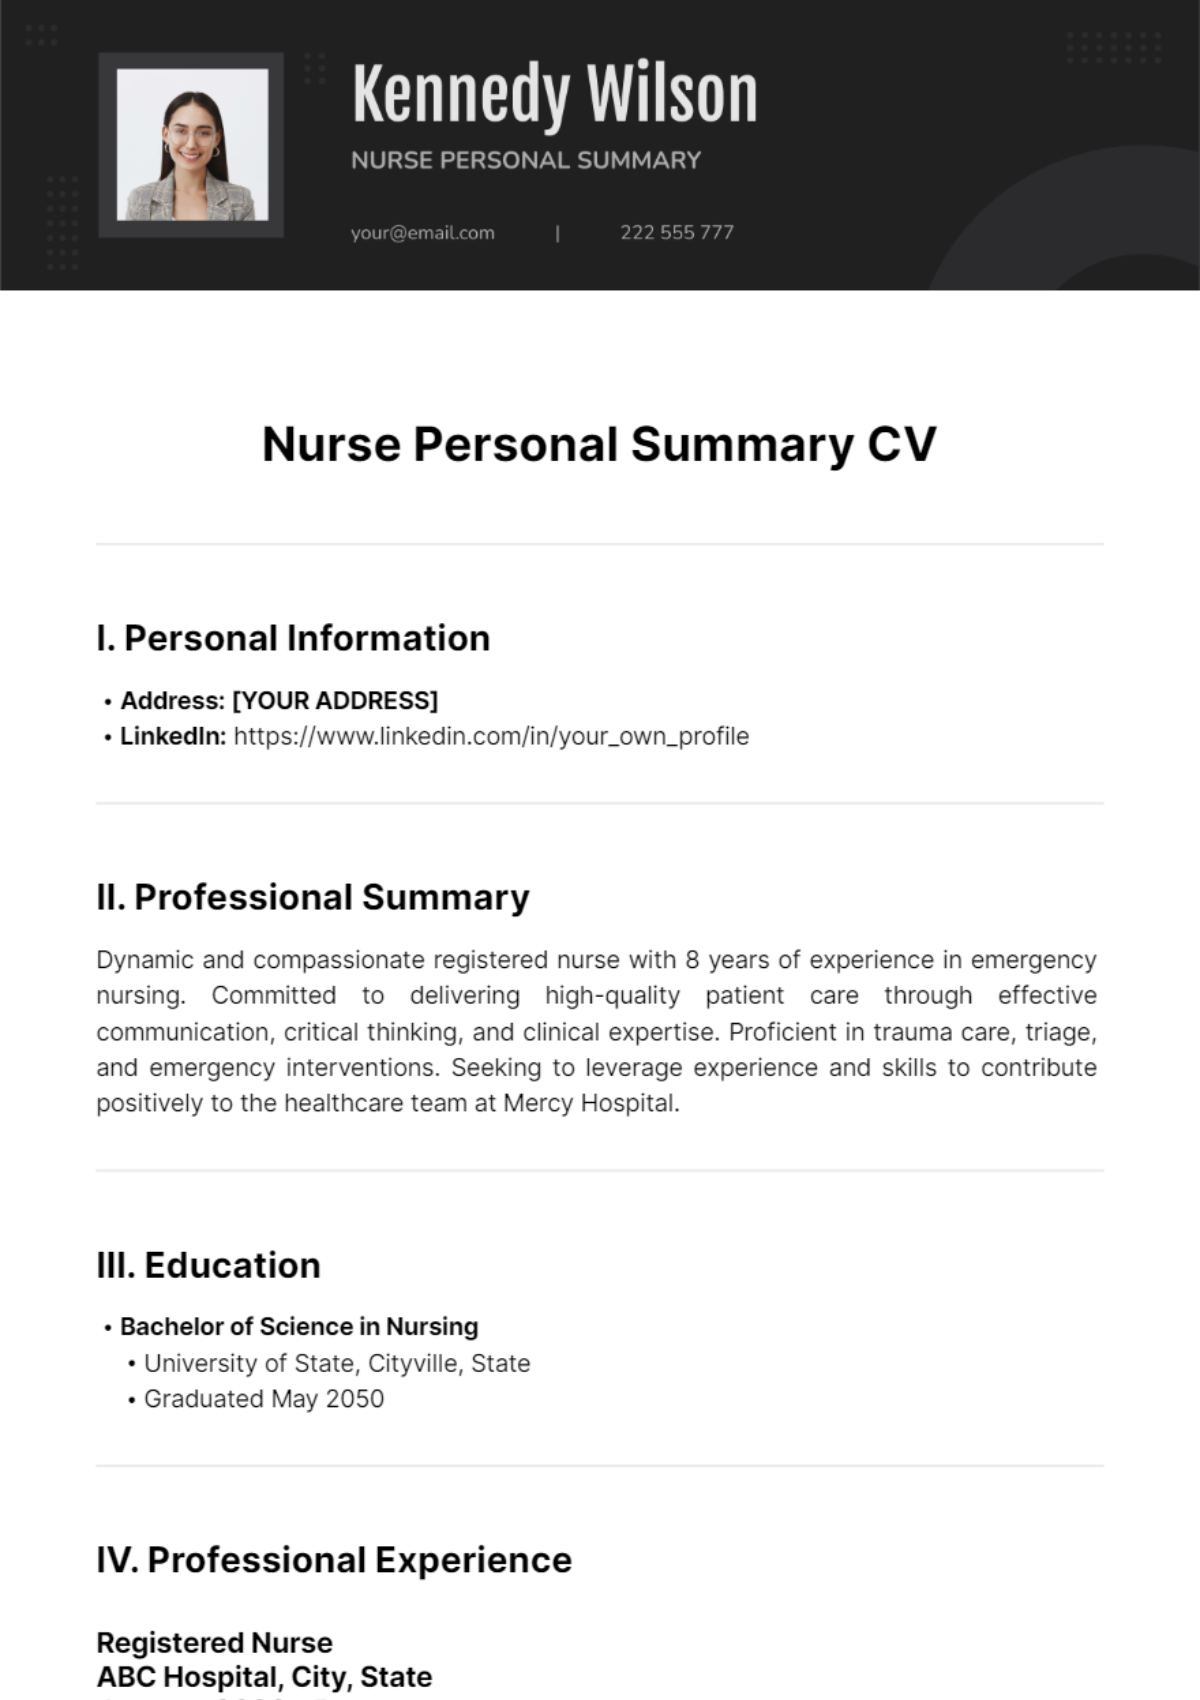 Nurse Personal Summary CV Template